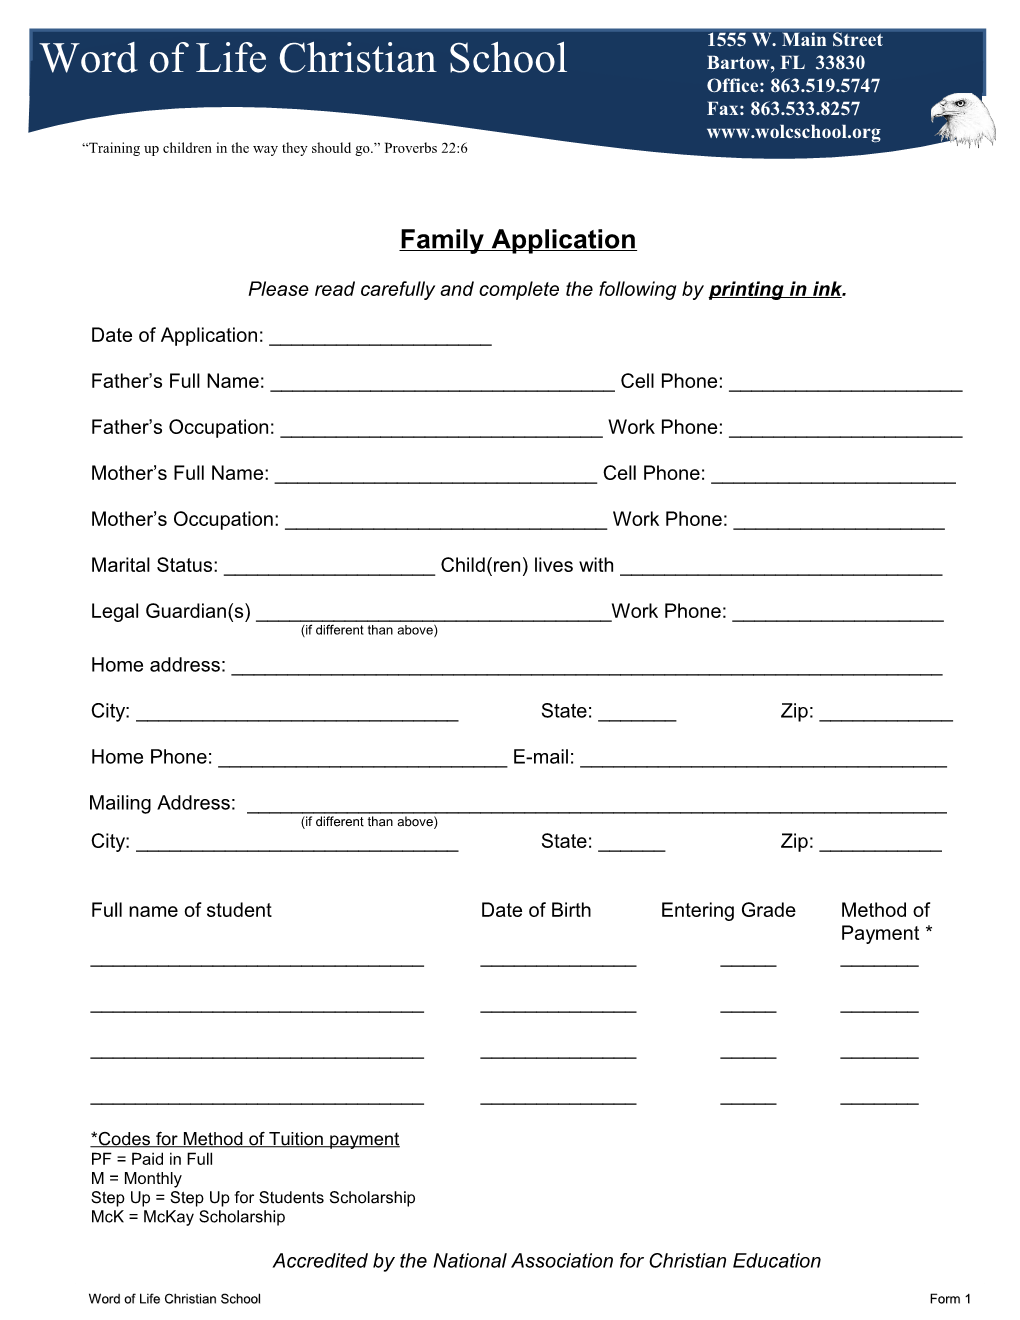 Family Application